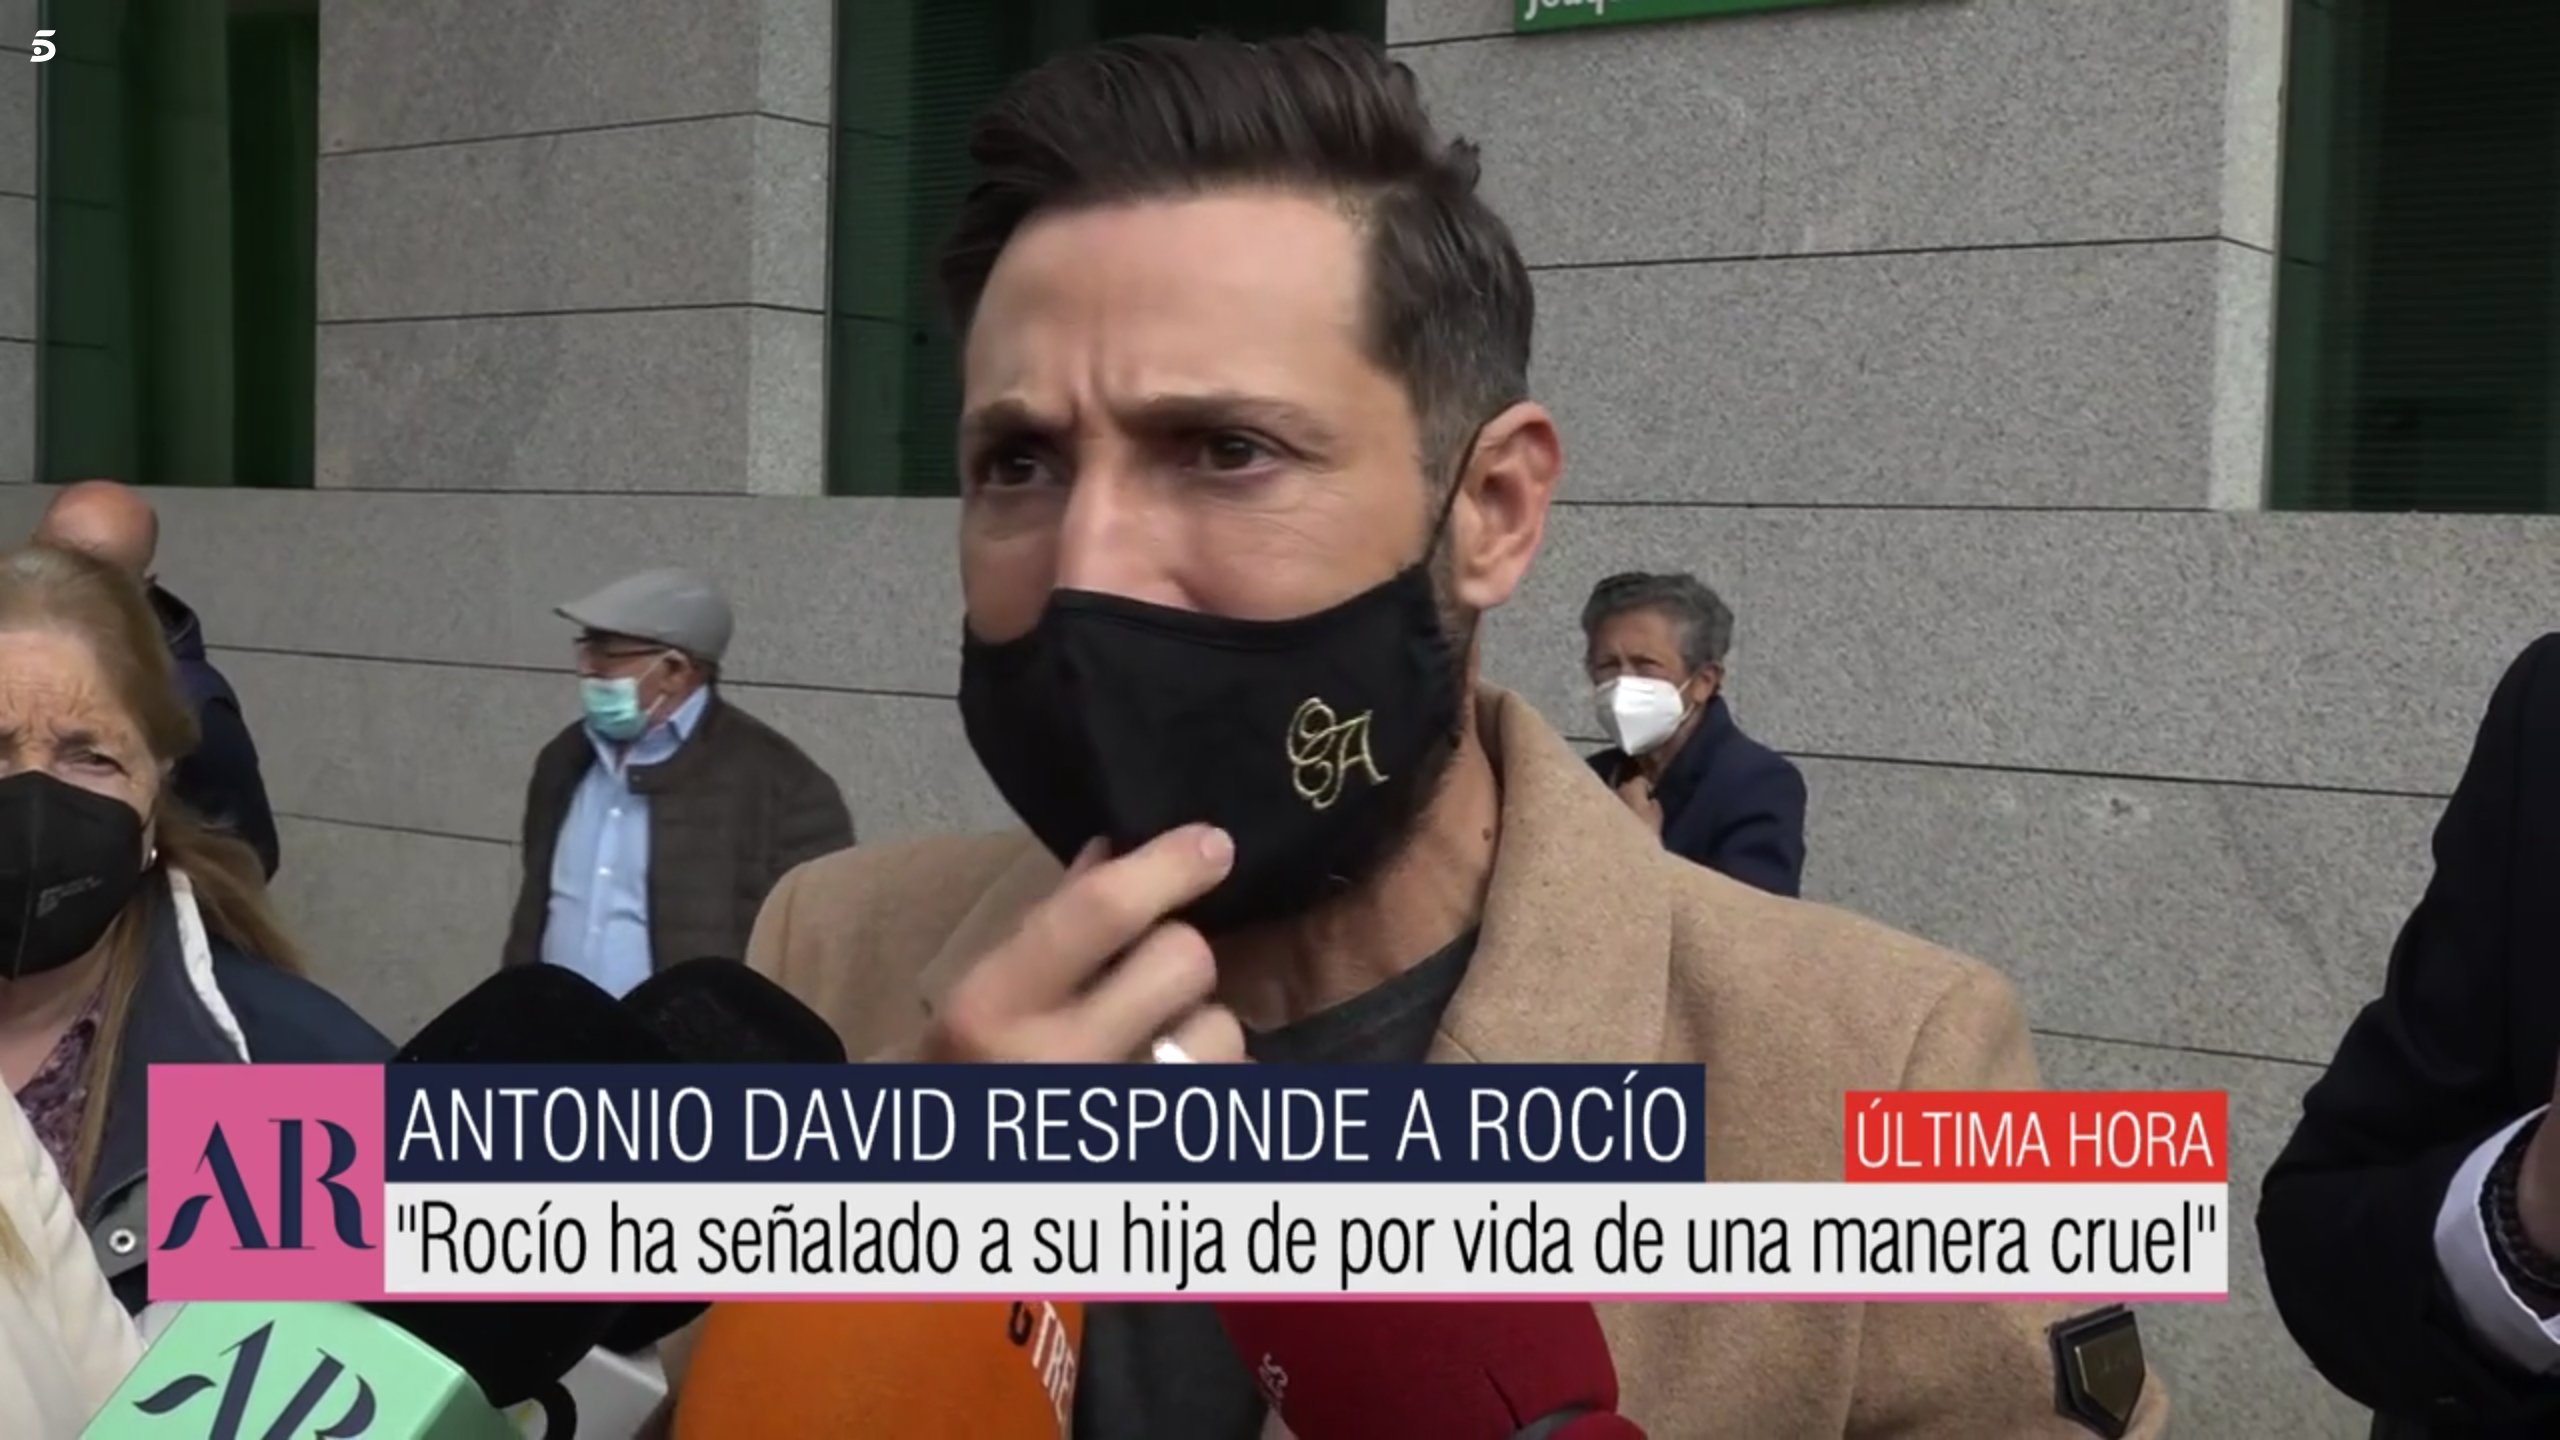 Antonio David acusa Rociíto de cruel amb la filla i amenaça: "tengo material"